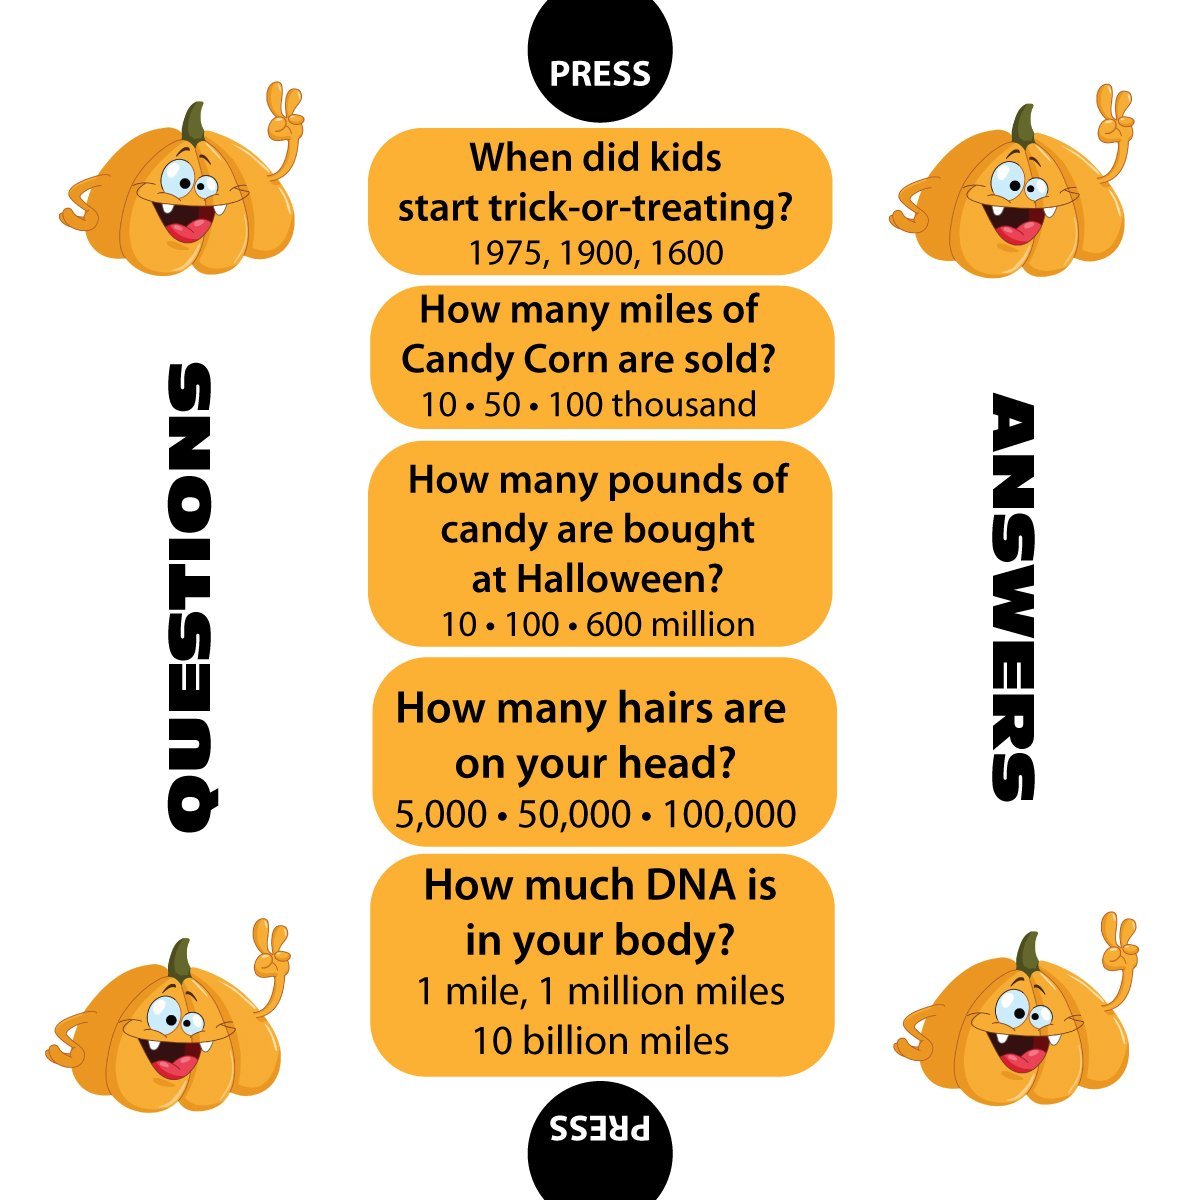 Take the Quiz Halloween Gospel Tract for Children - 24/PK